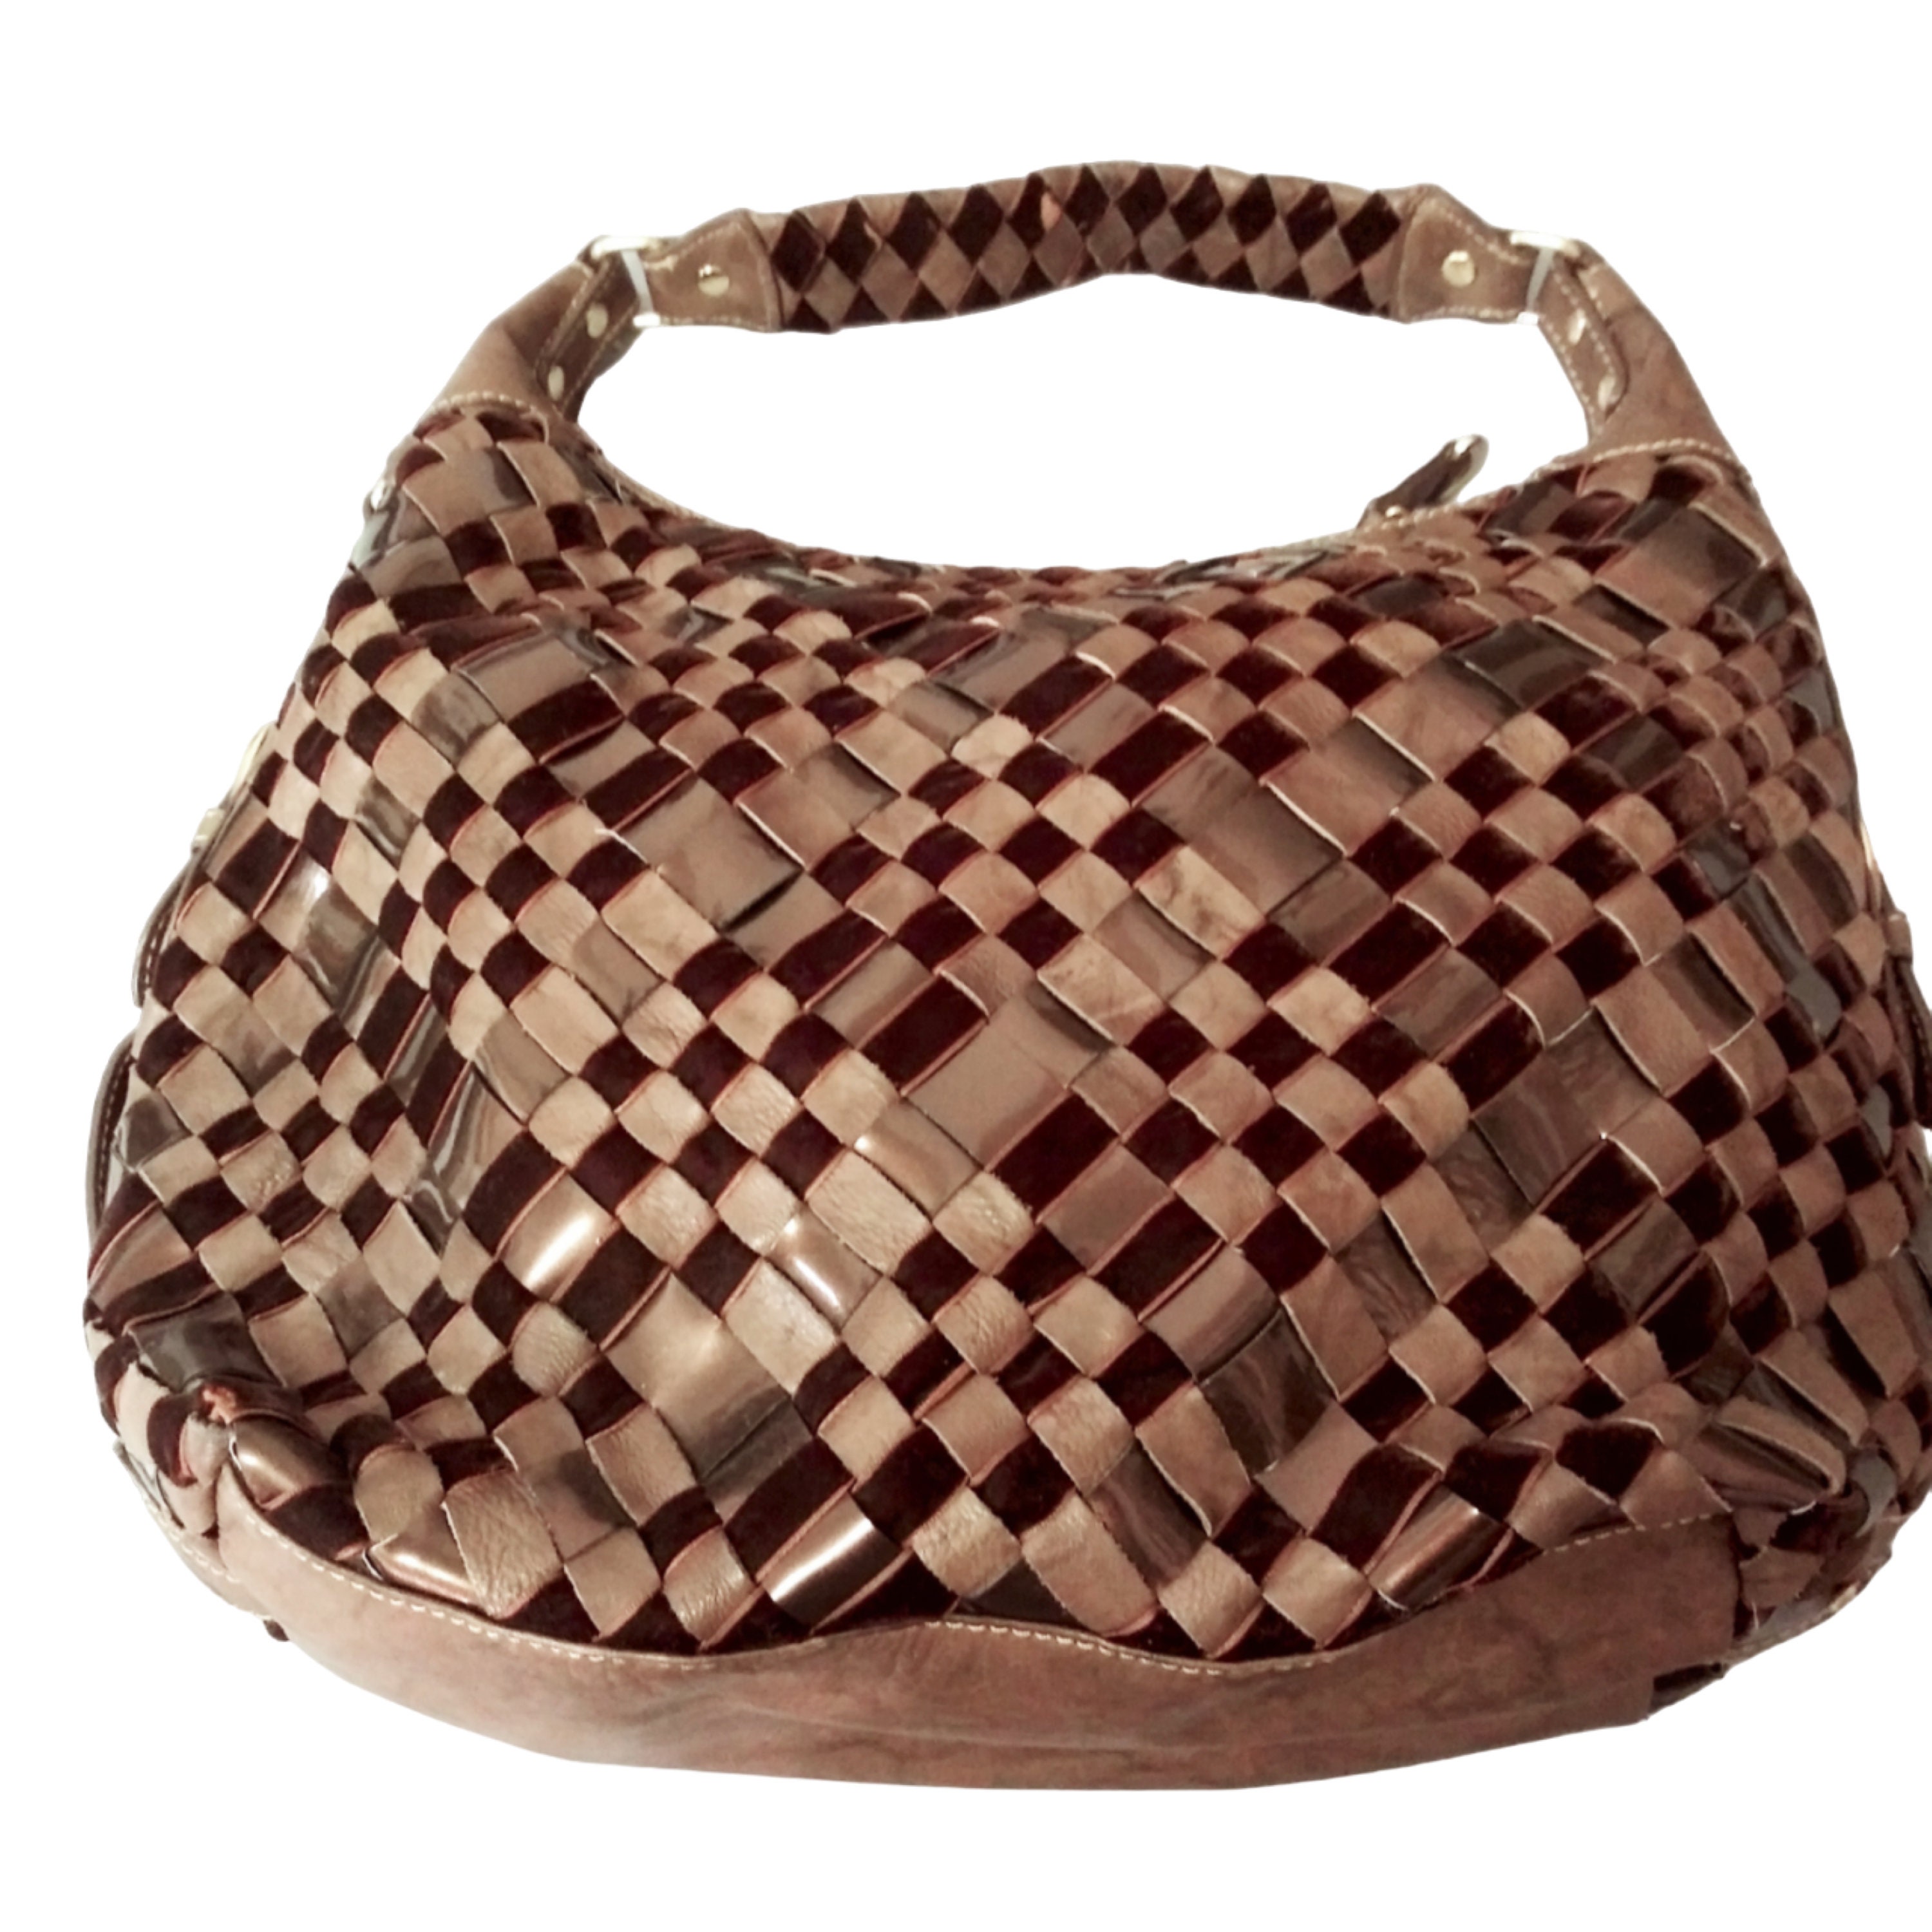 Our kathy ireland handbags available at TJ Maxx stores.